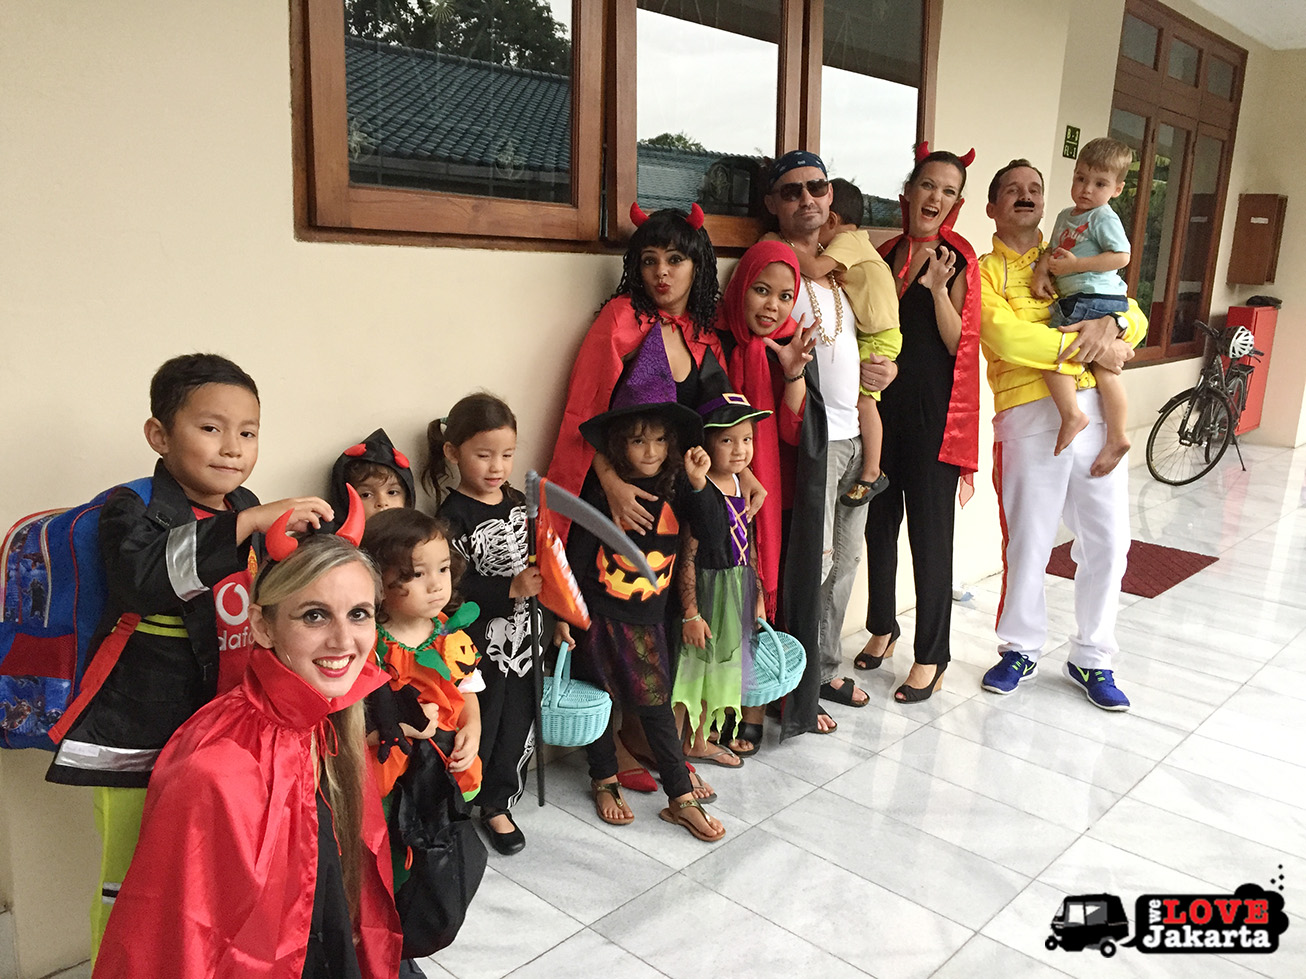 Welovejakarta_tasha may_Happy Halloween 2016_BWA House Halloween 2016_St Patricks Society Jakarta Halloween